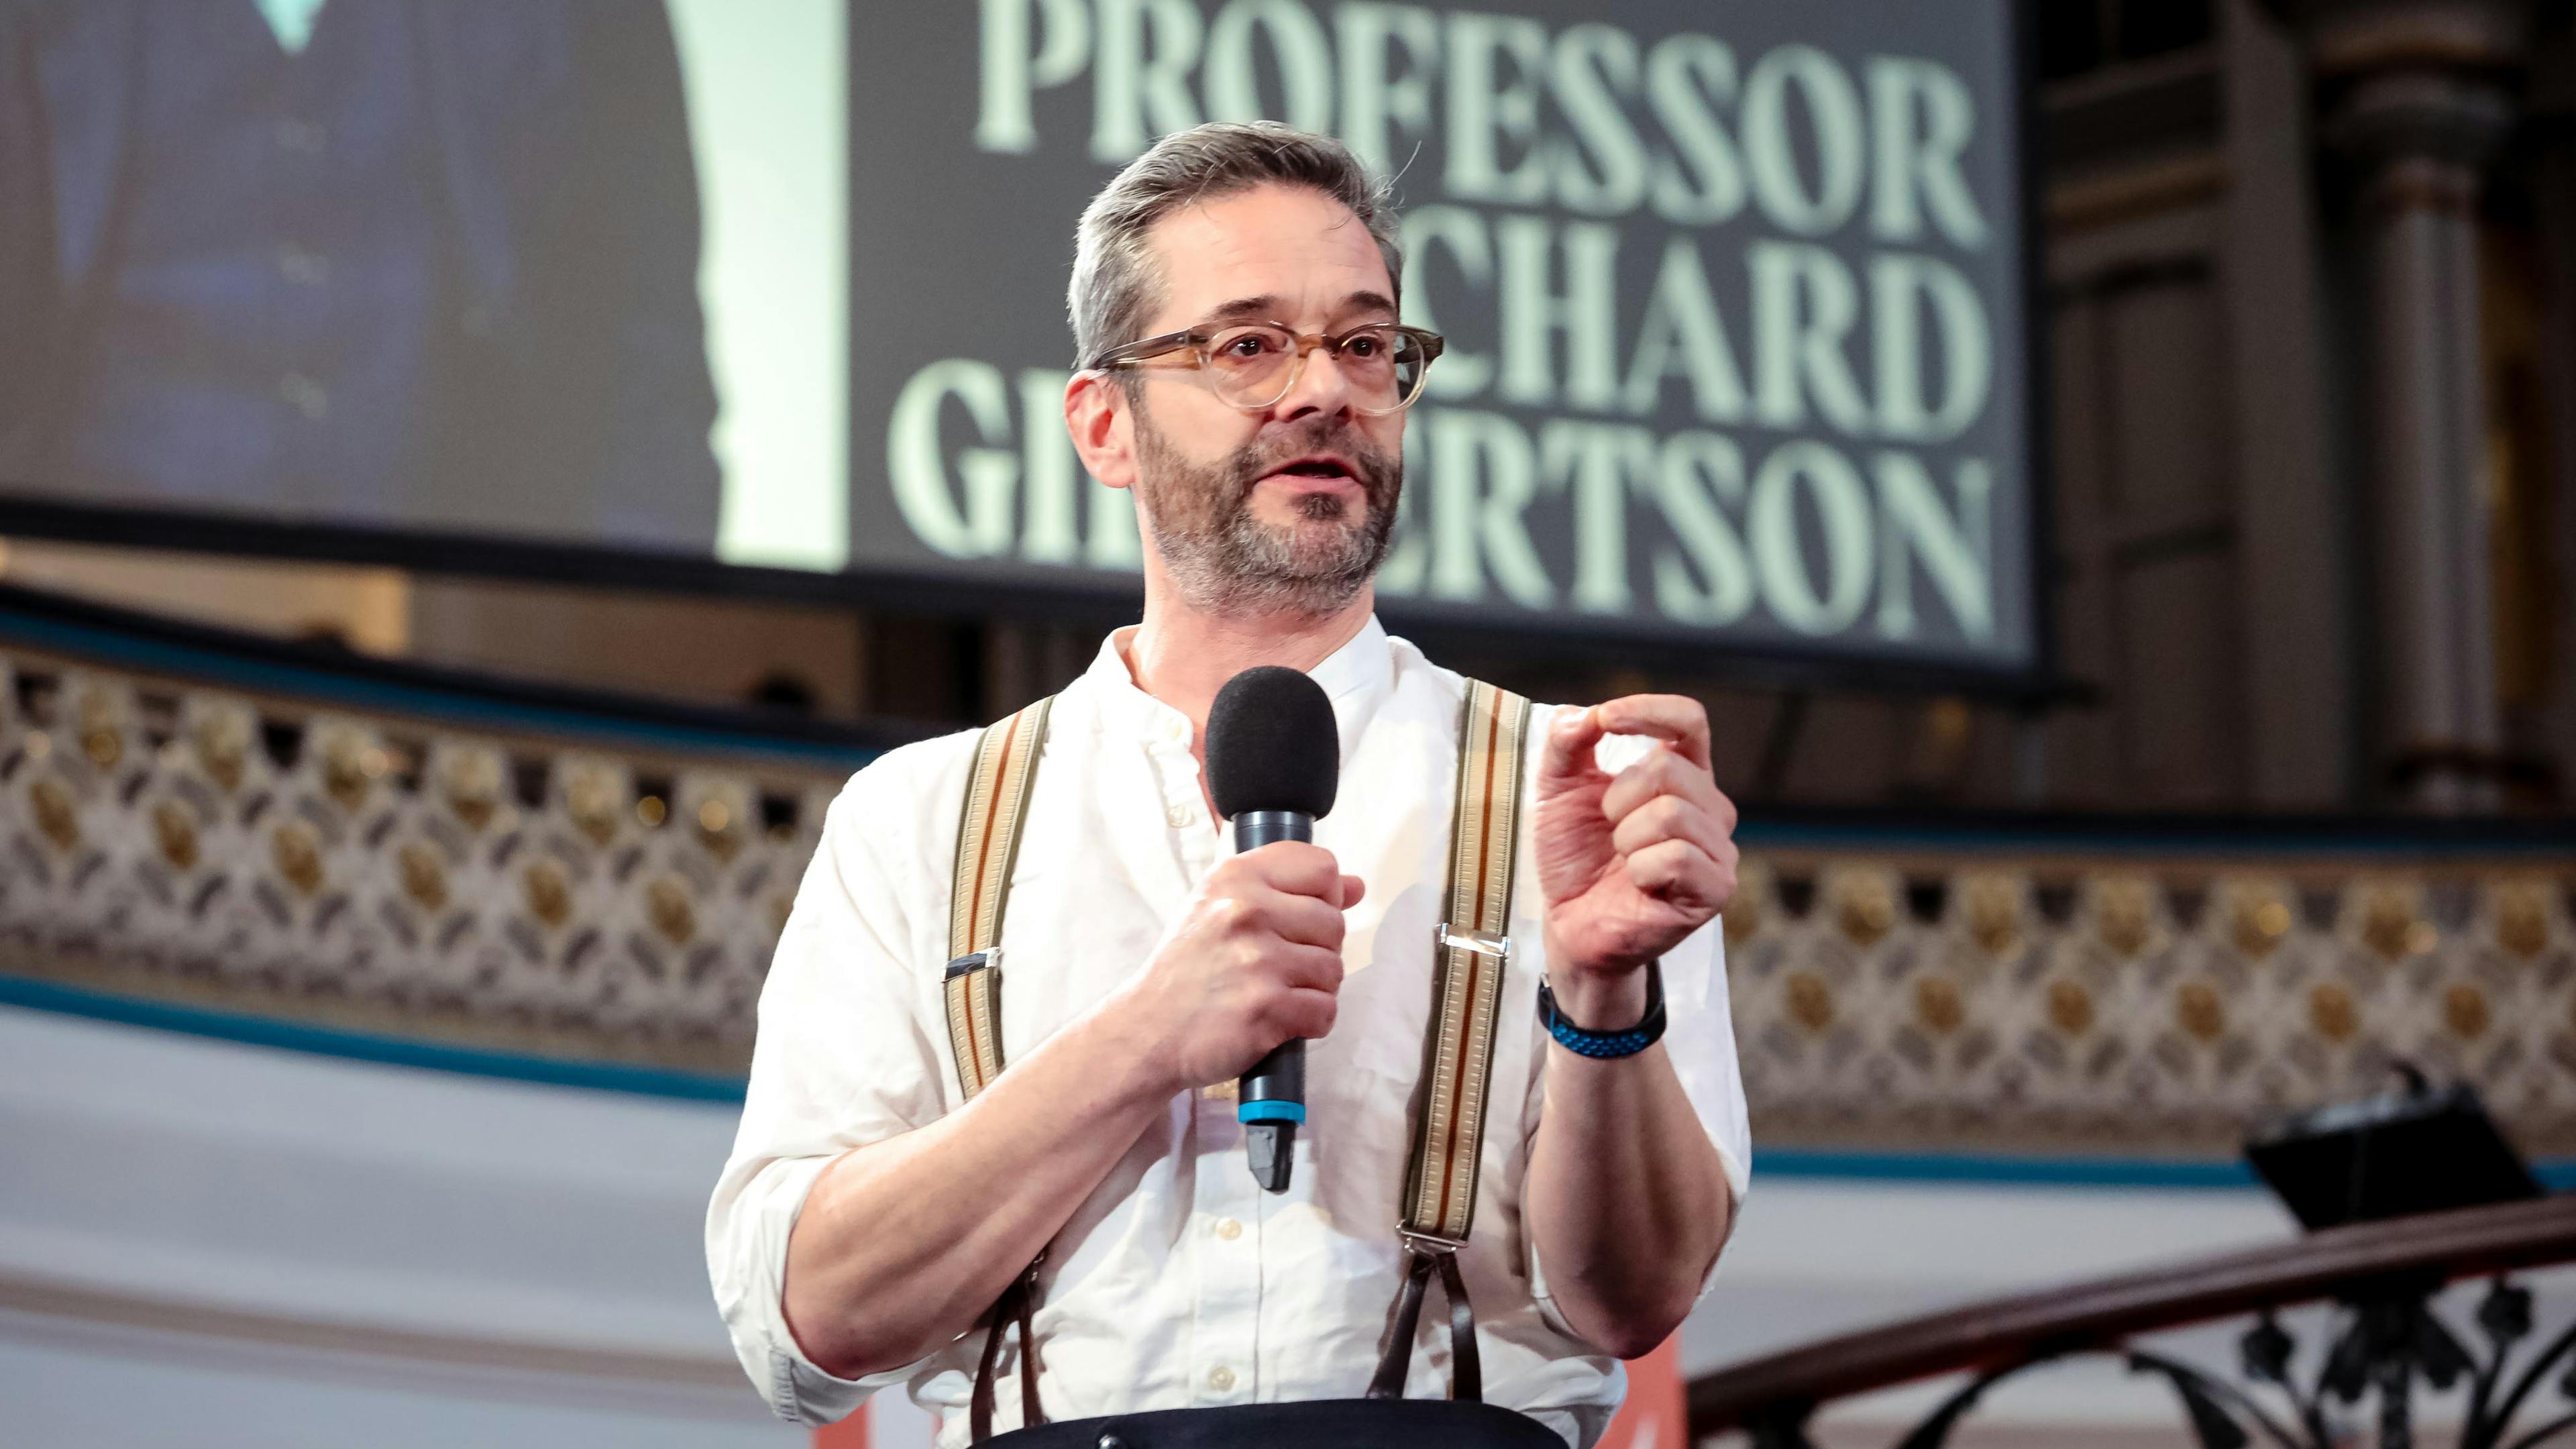 Professor Richard Gilbertson speaking on a stage.